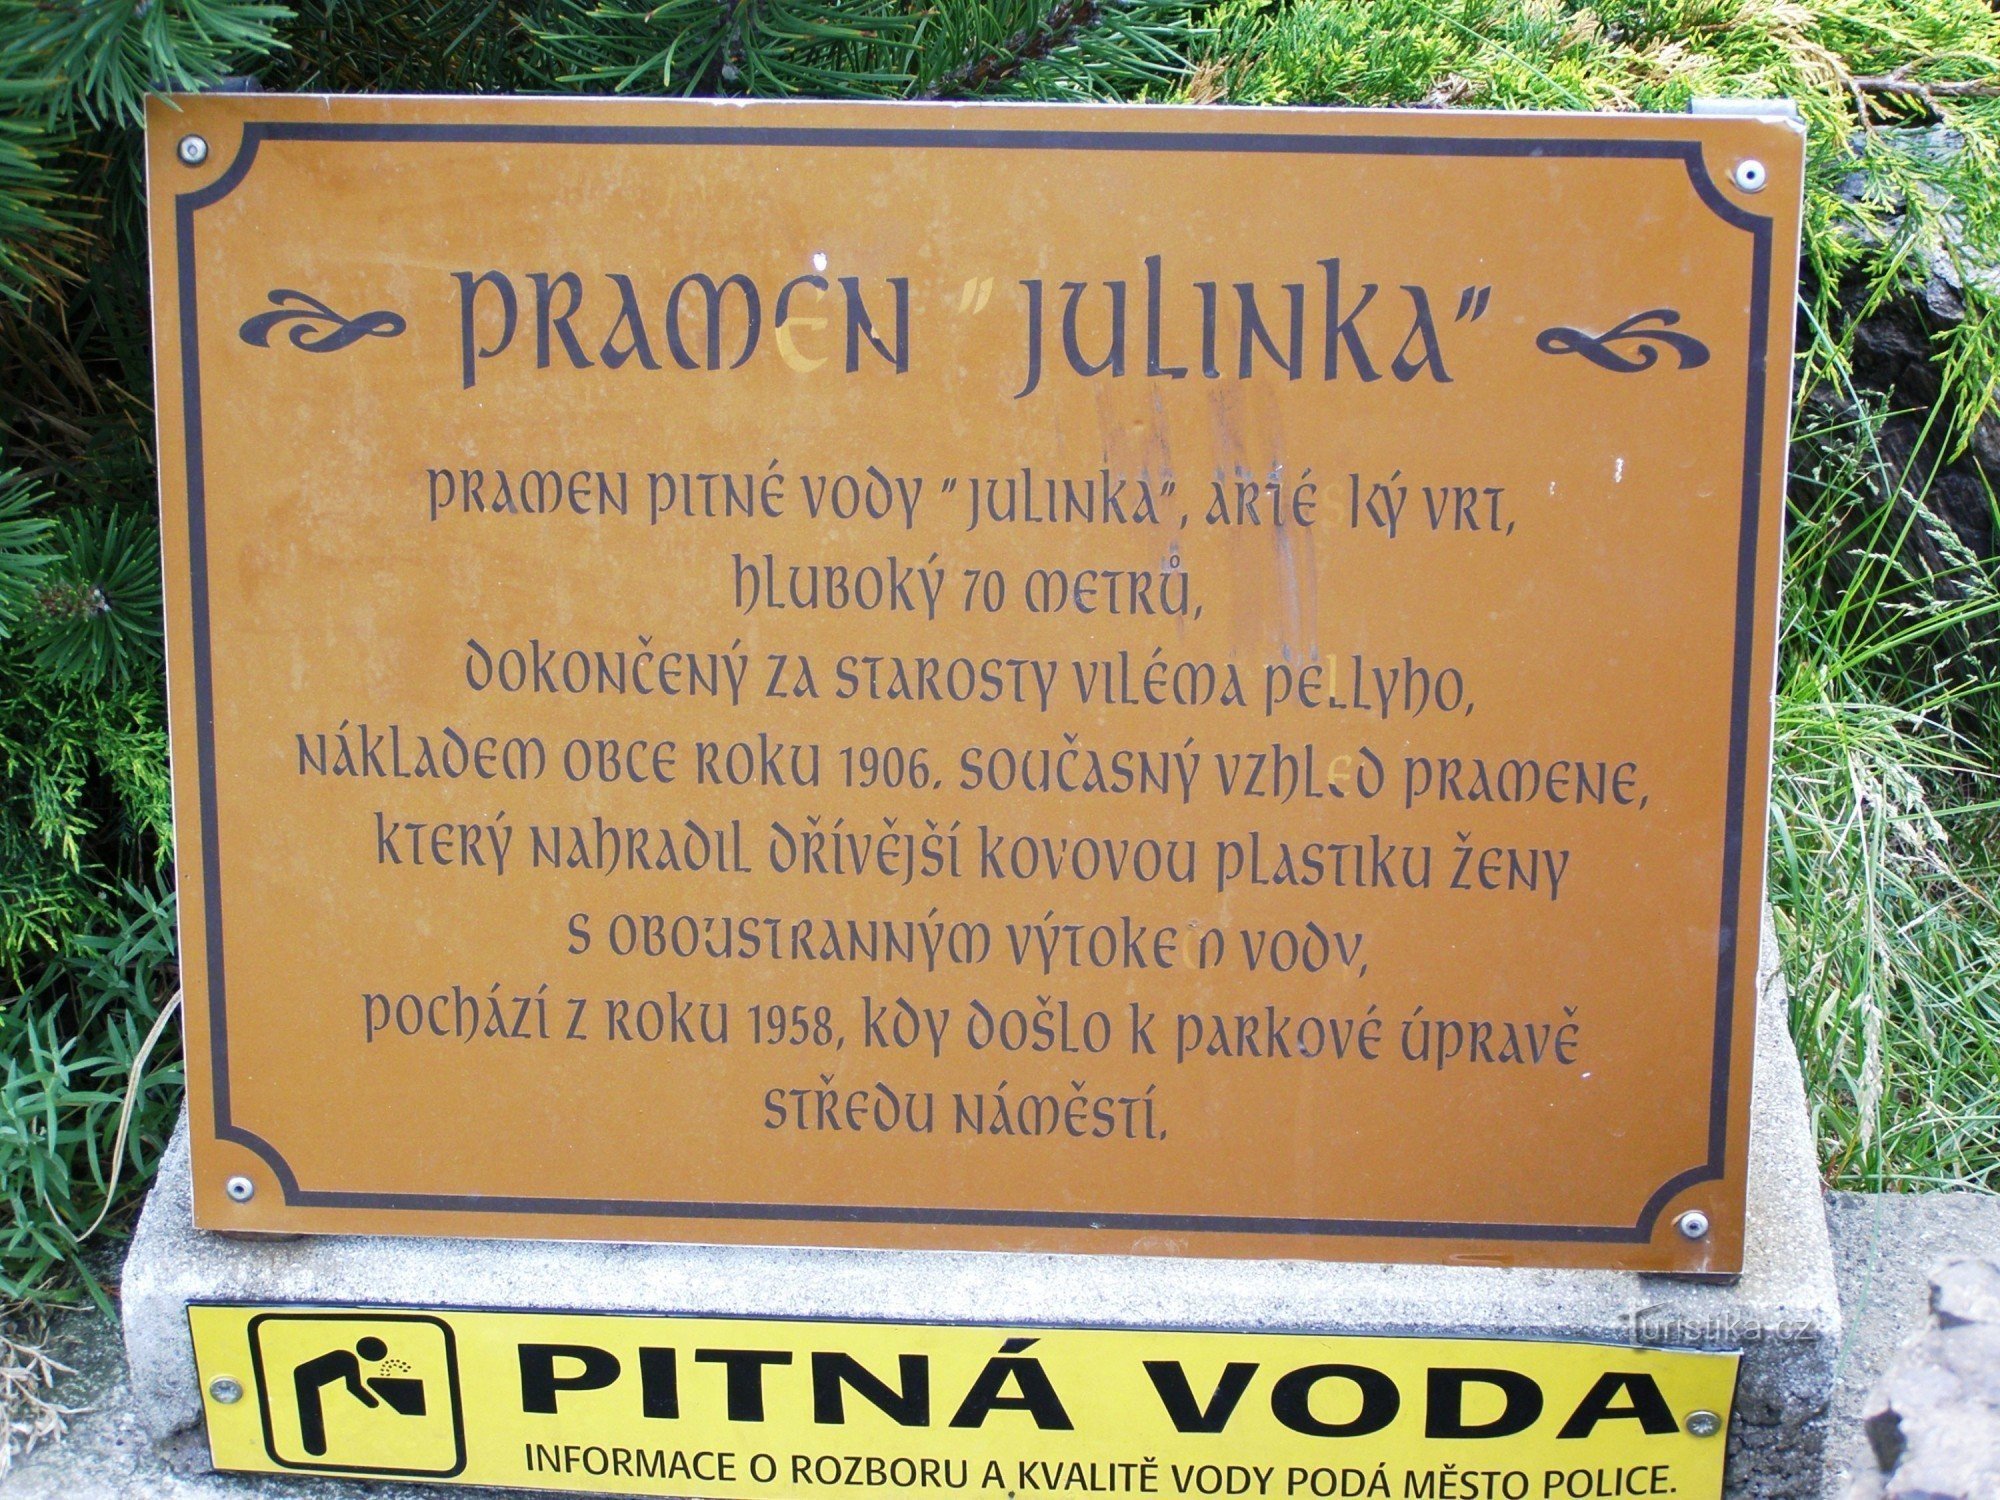 Raft deasupra Metují - primăvara Julinka